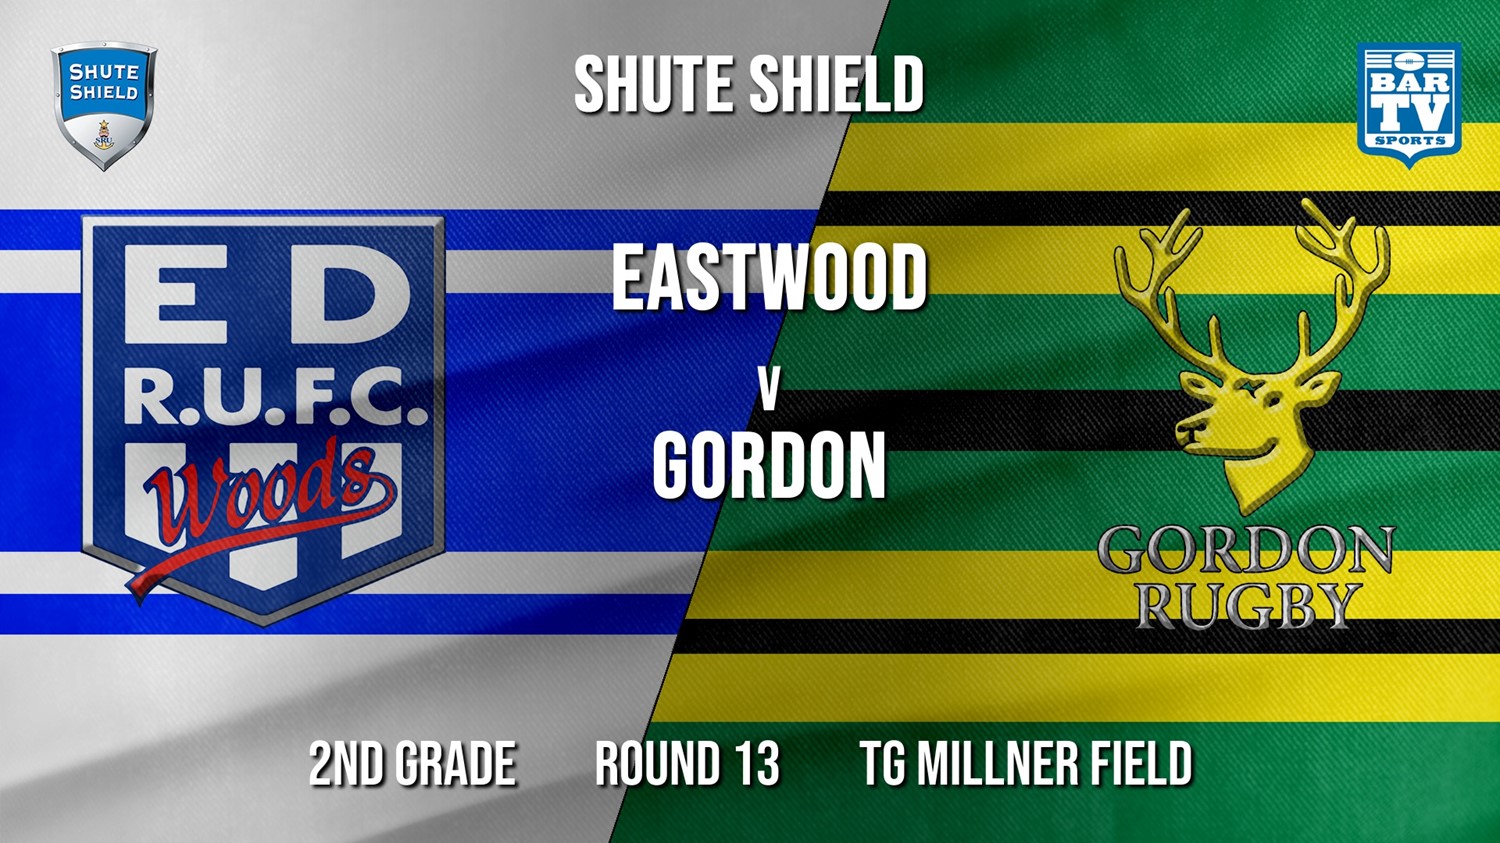 Shute Shield Round 13 - 2nd Grade - Eastwood v Gordon Minigame Slate Image